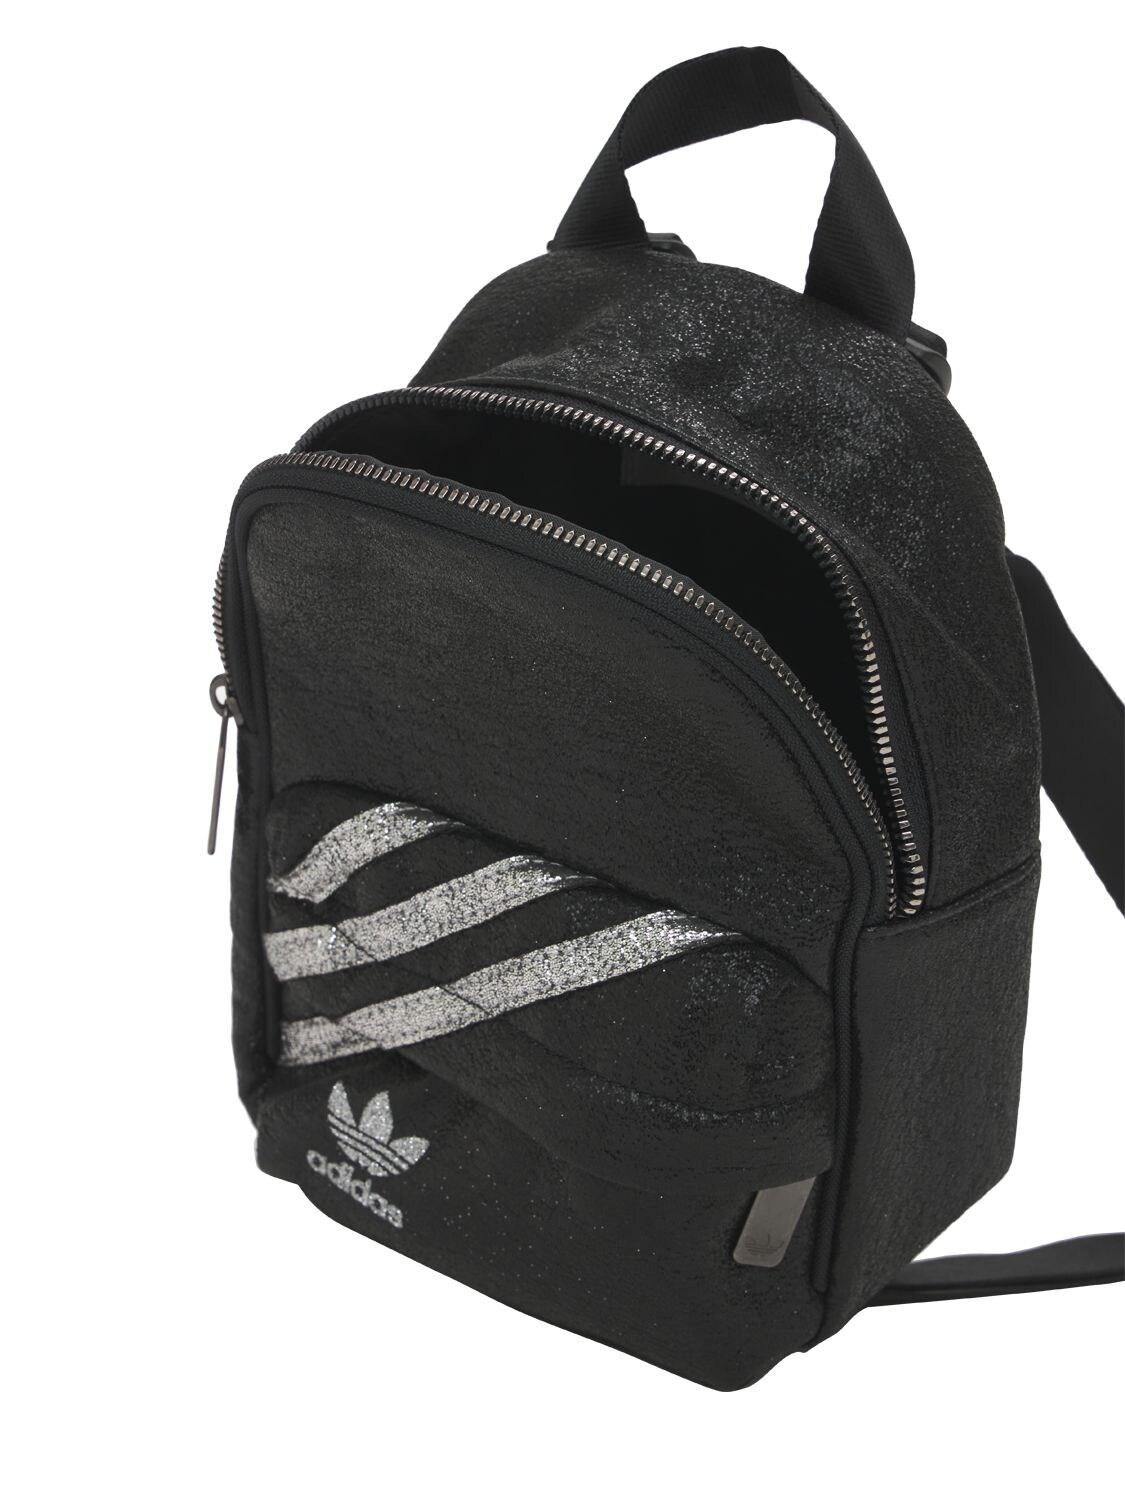 adidas Originals Bp Mini Backpack in Black - Lyst